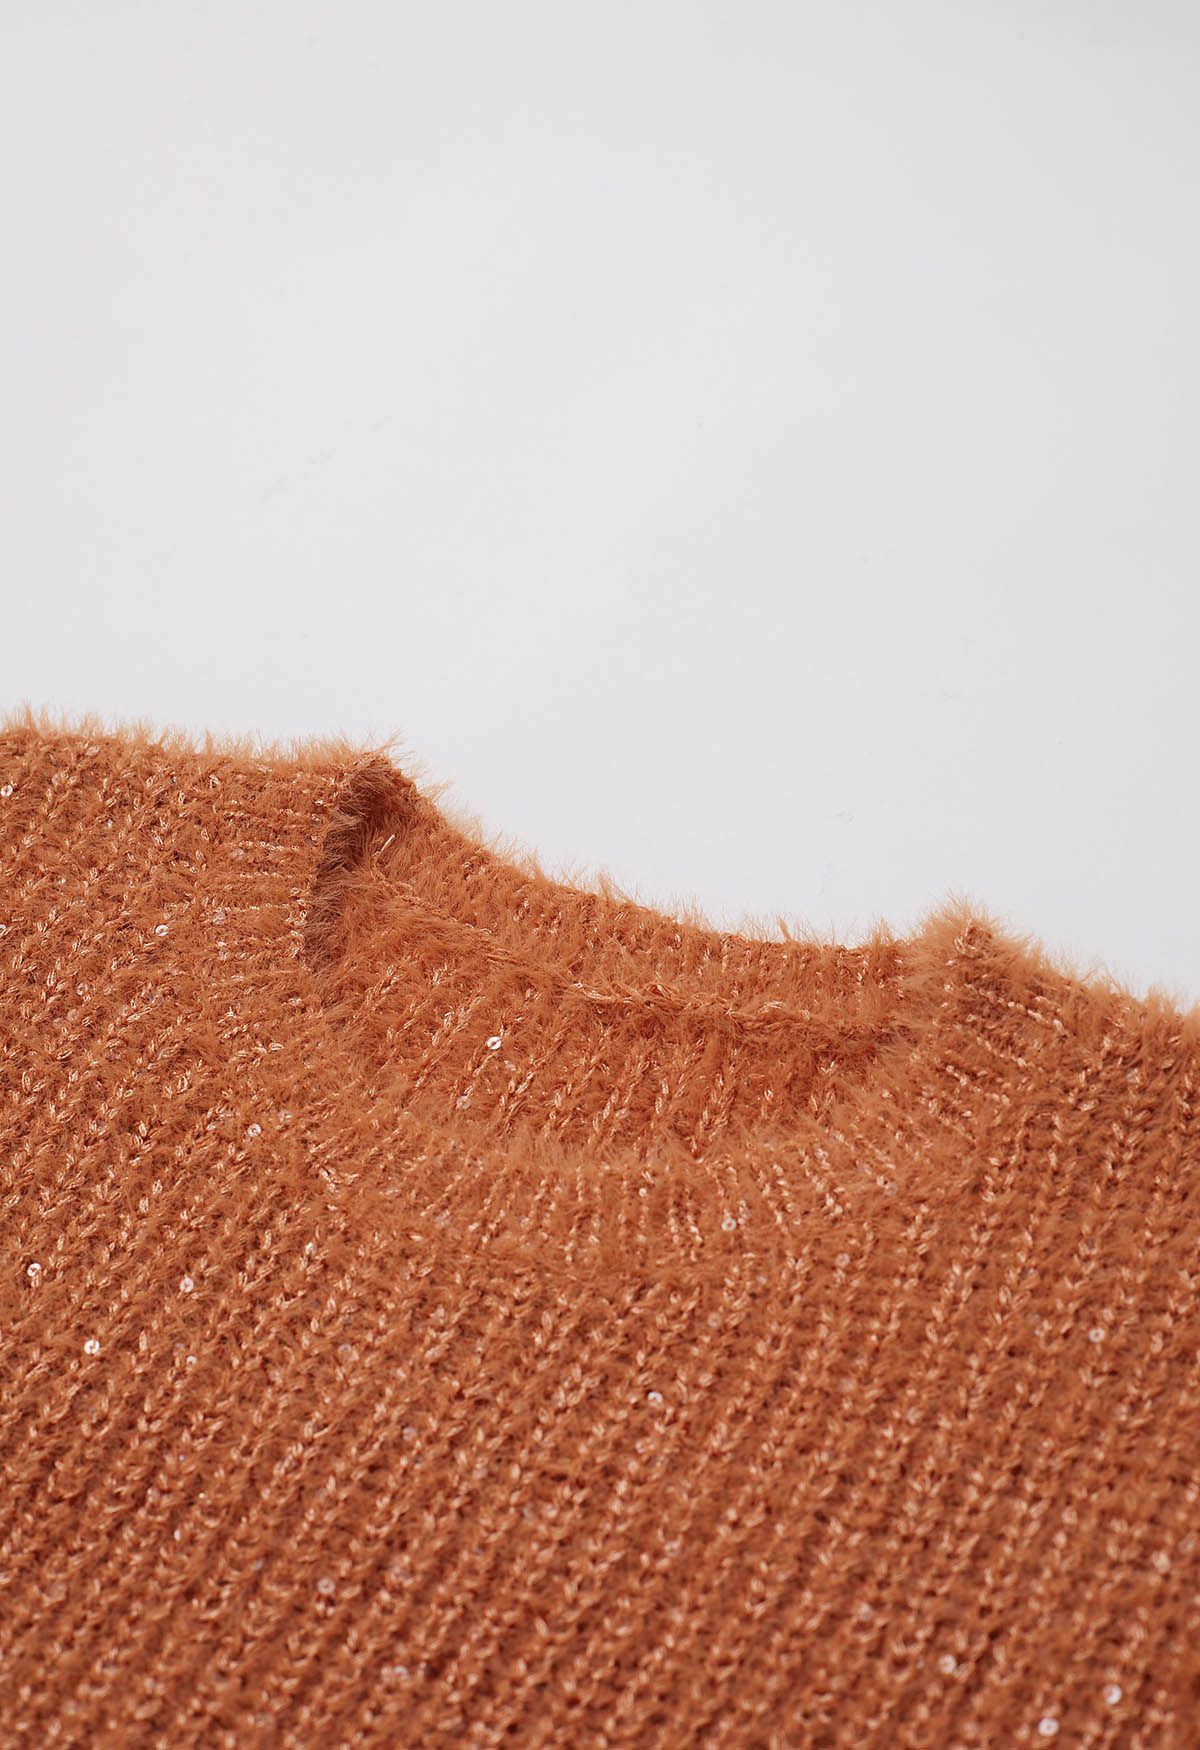 Suéter de manga corta con lentejuelas en naranja